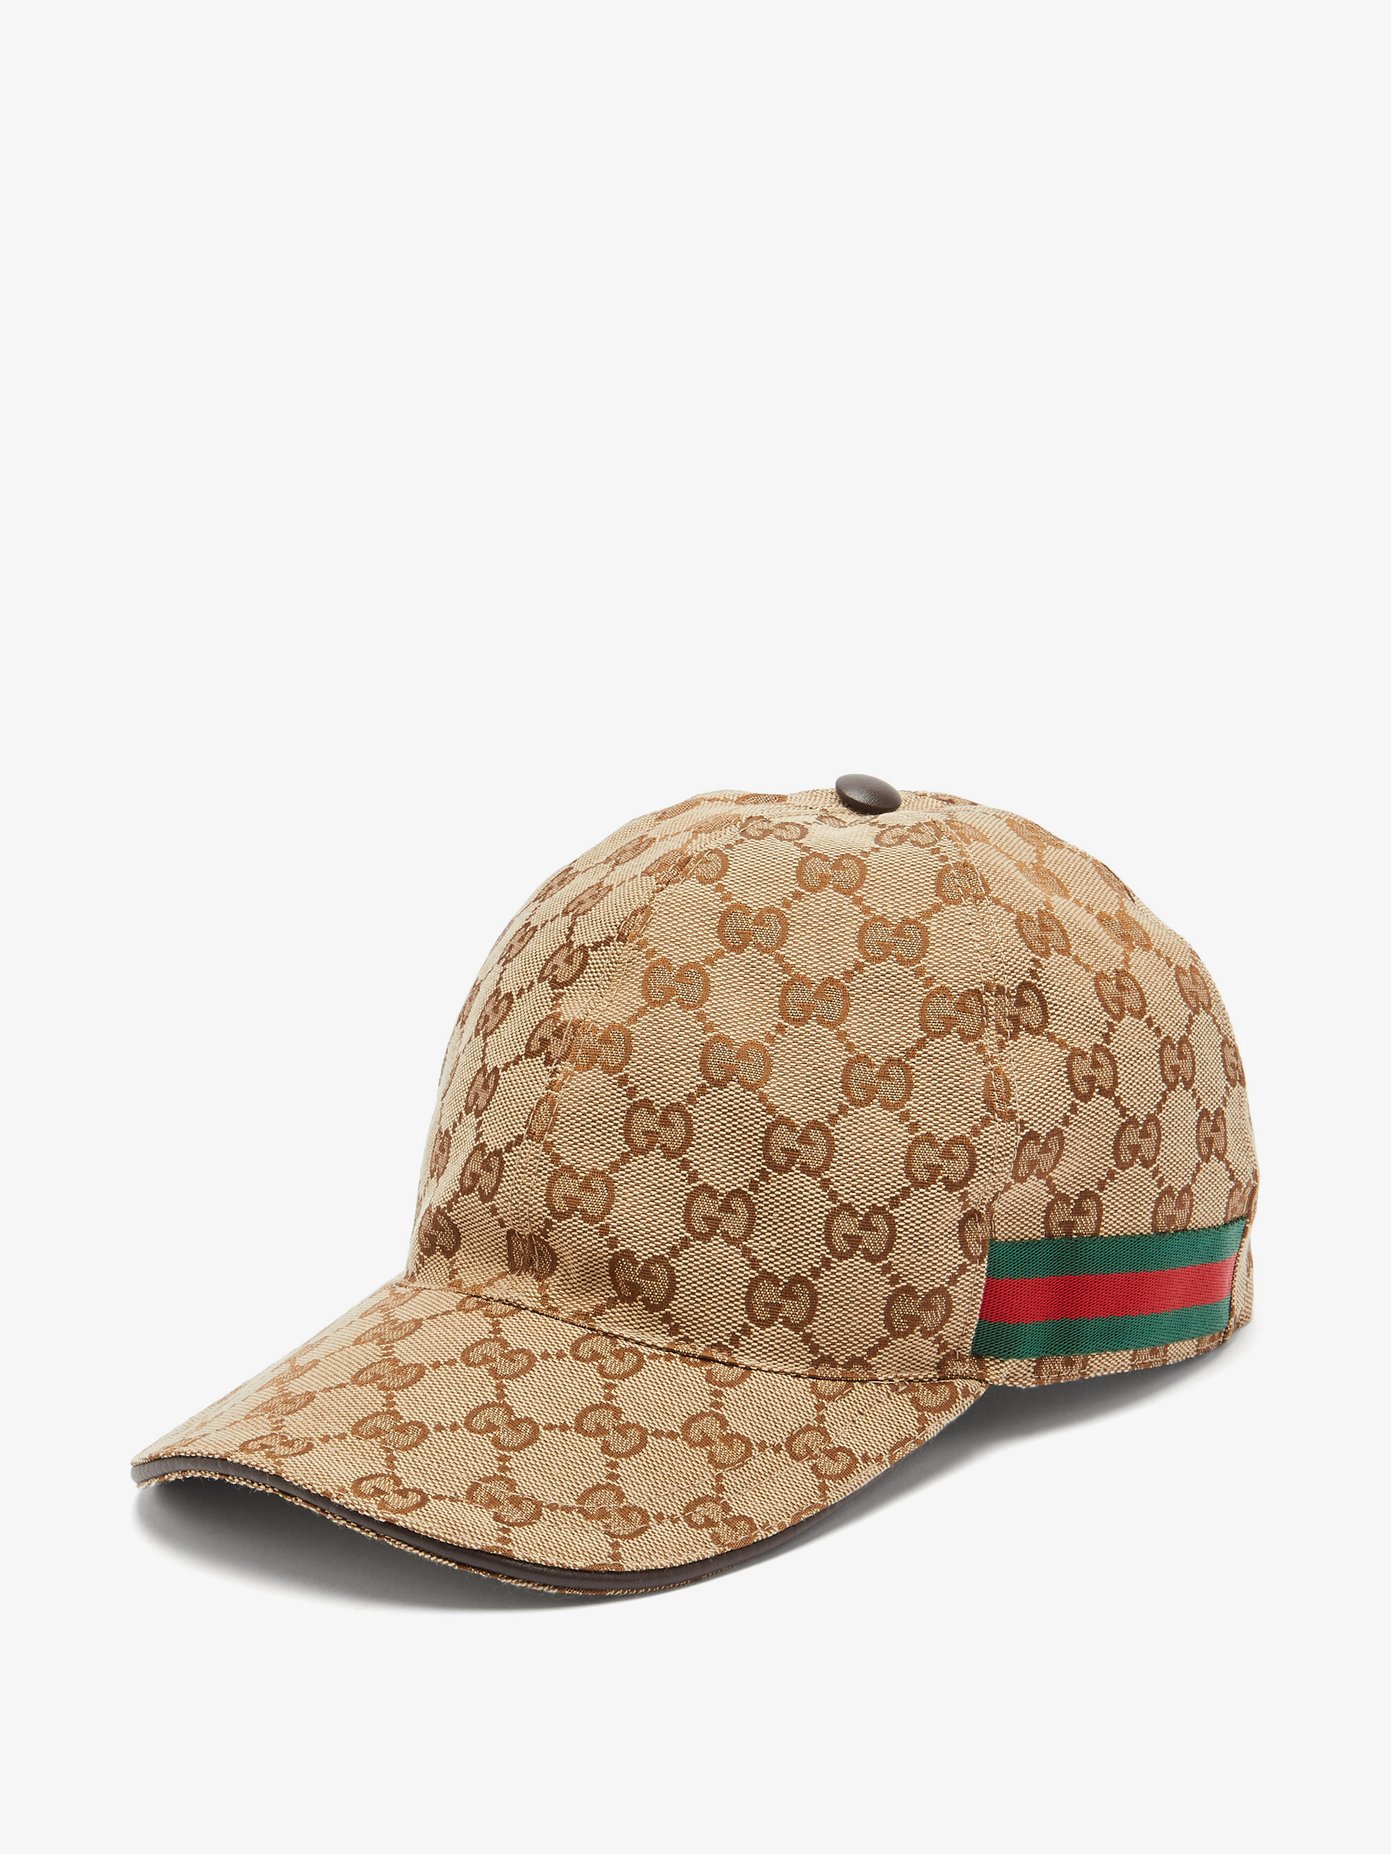 buy gucci hat